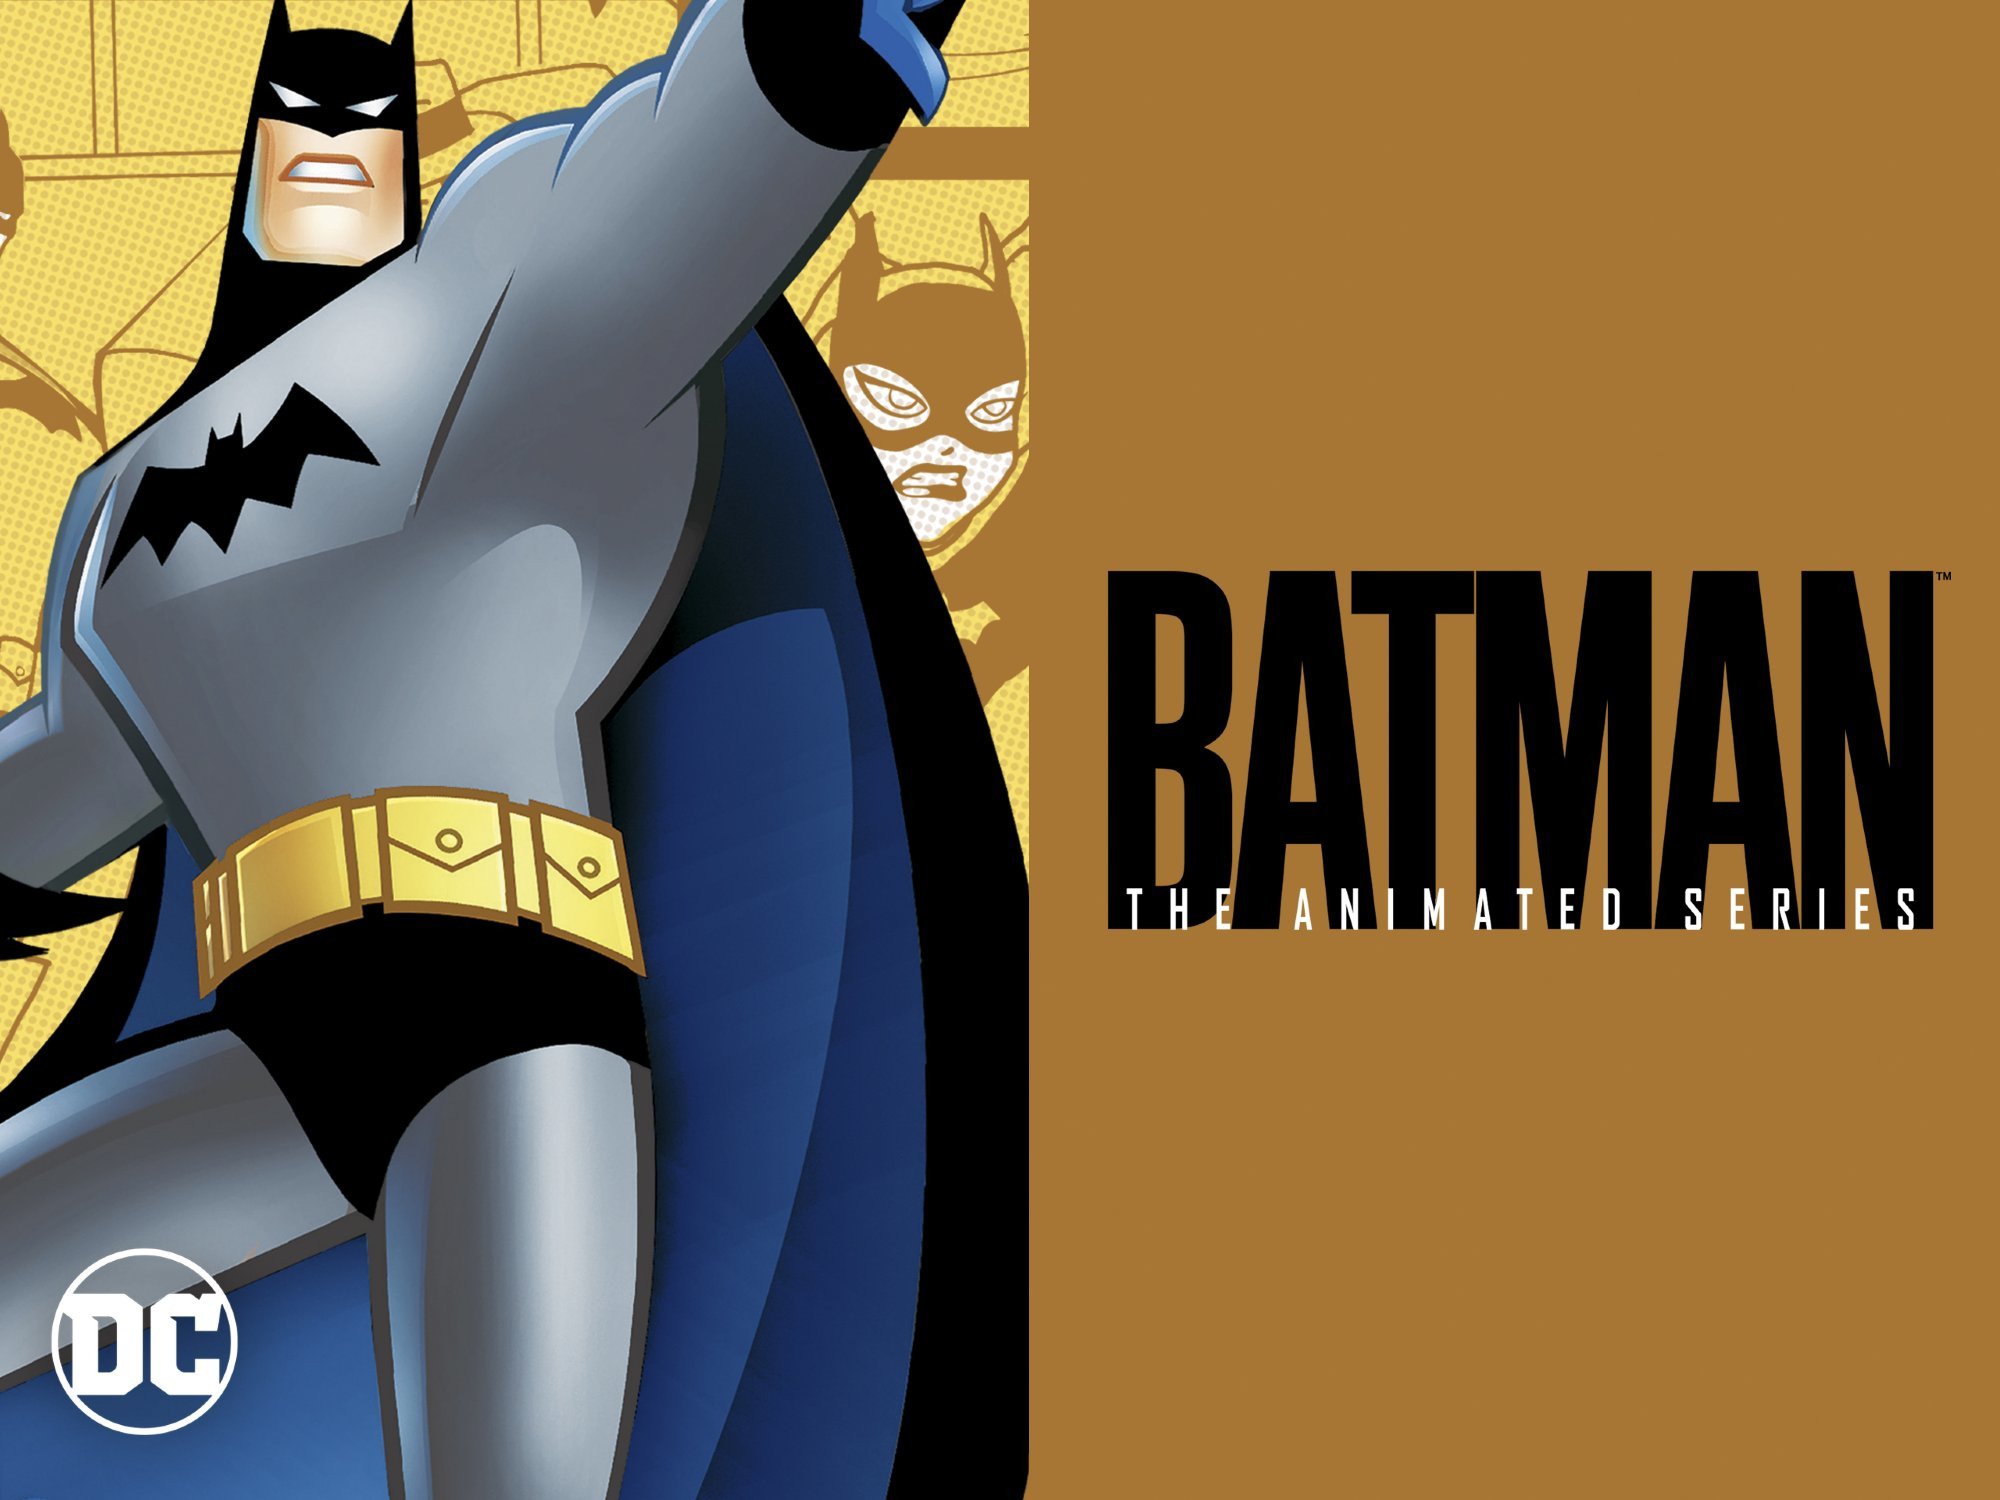 Скачати мобільні шпалери Бетмен, Телешоу, Бетмен: Мультсеріал, Брюс Уейн безкоштовно.